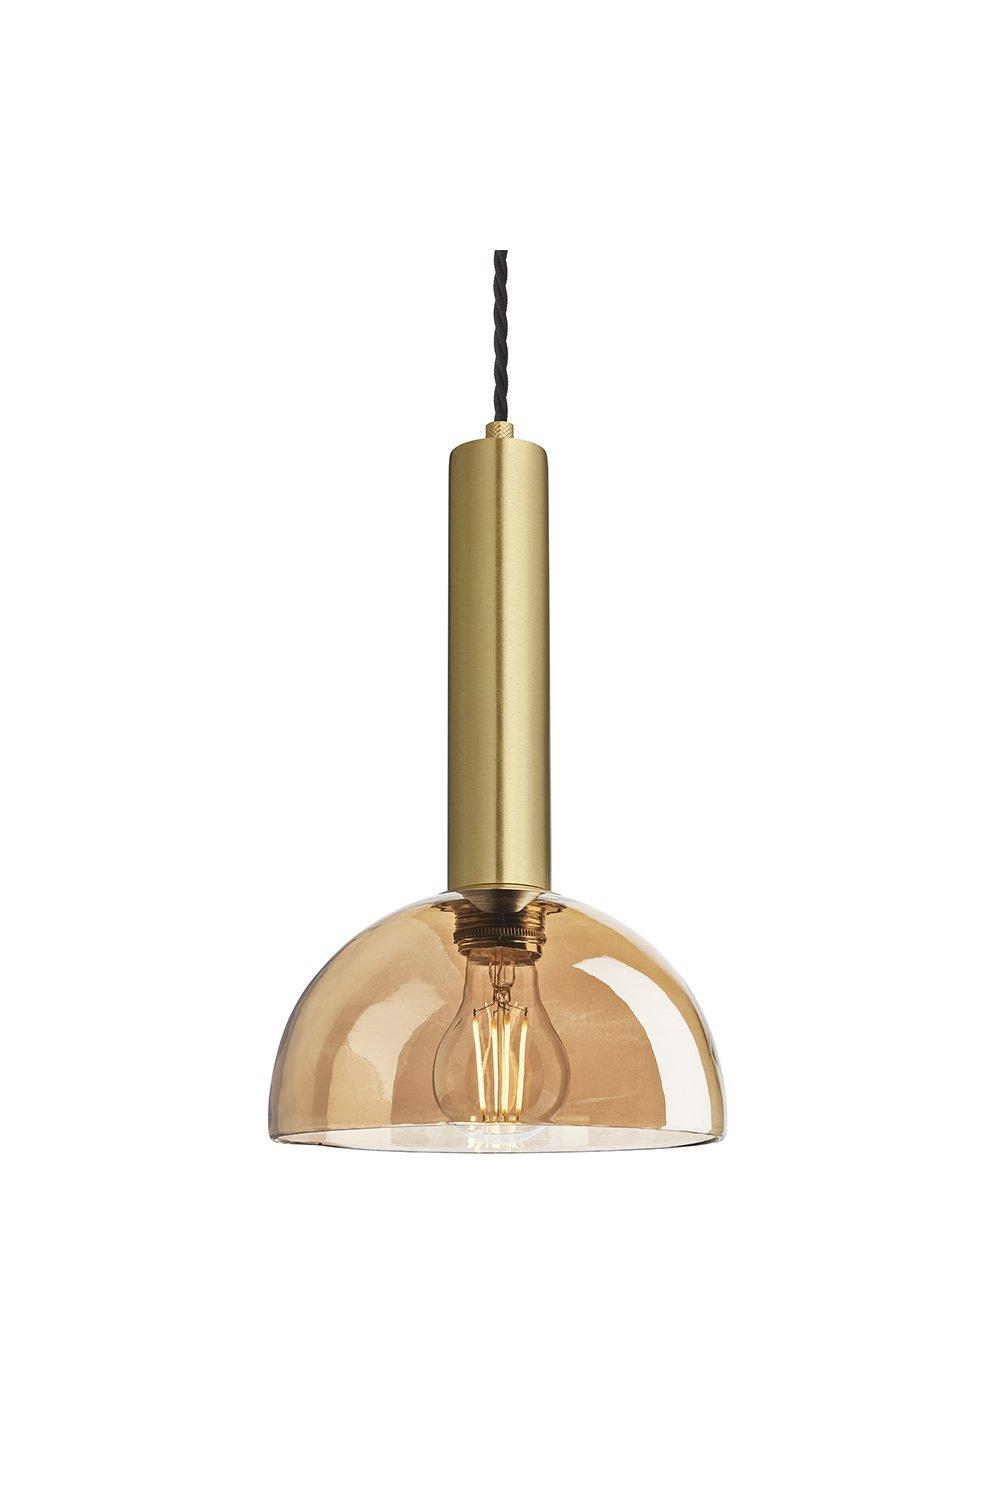 Sleek Cylinder Tinted Glass Dome Pendant Light, 8 Inch, Amber, Brass Holder